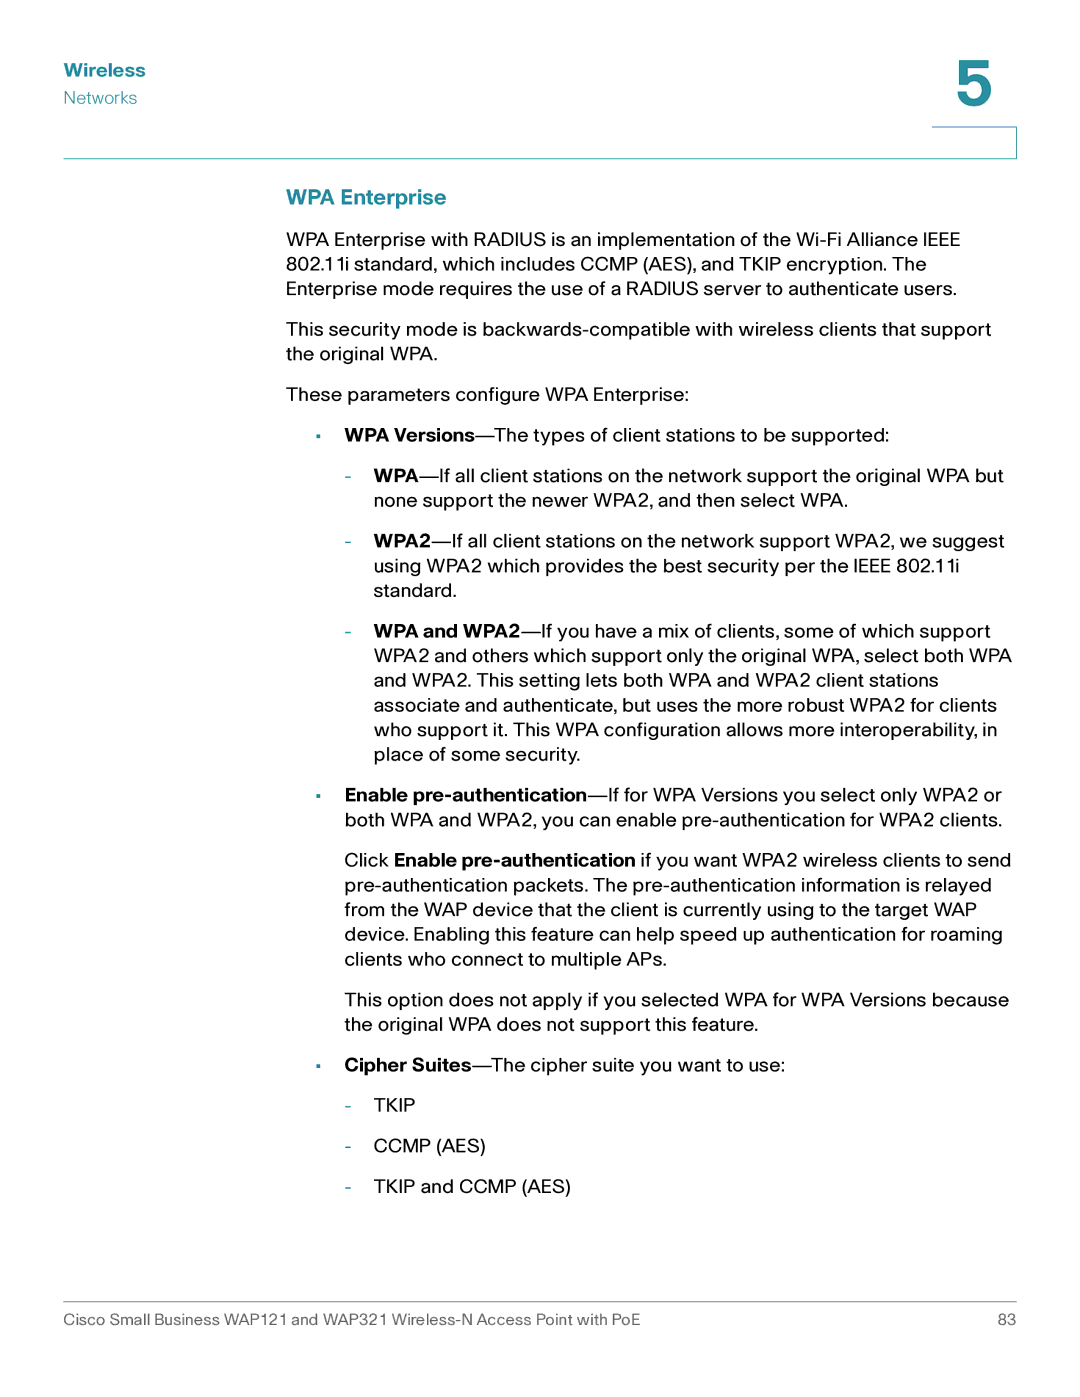 Cisco Systems WAP321, WAP121 manual WPA Enterprise 